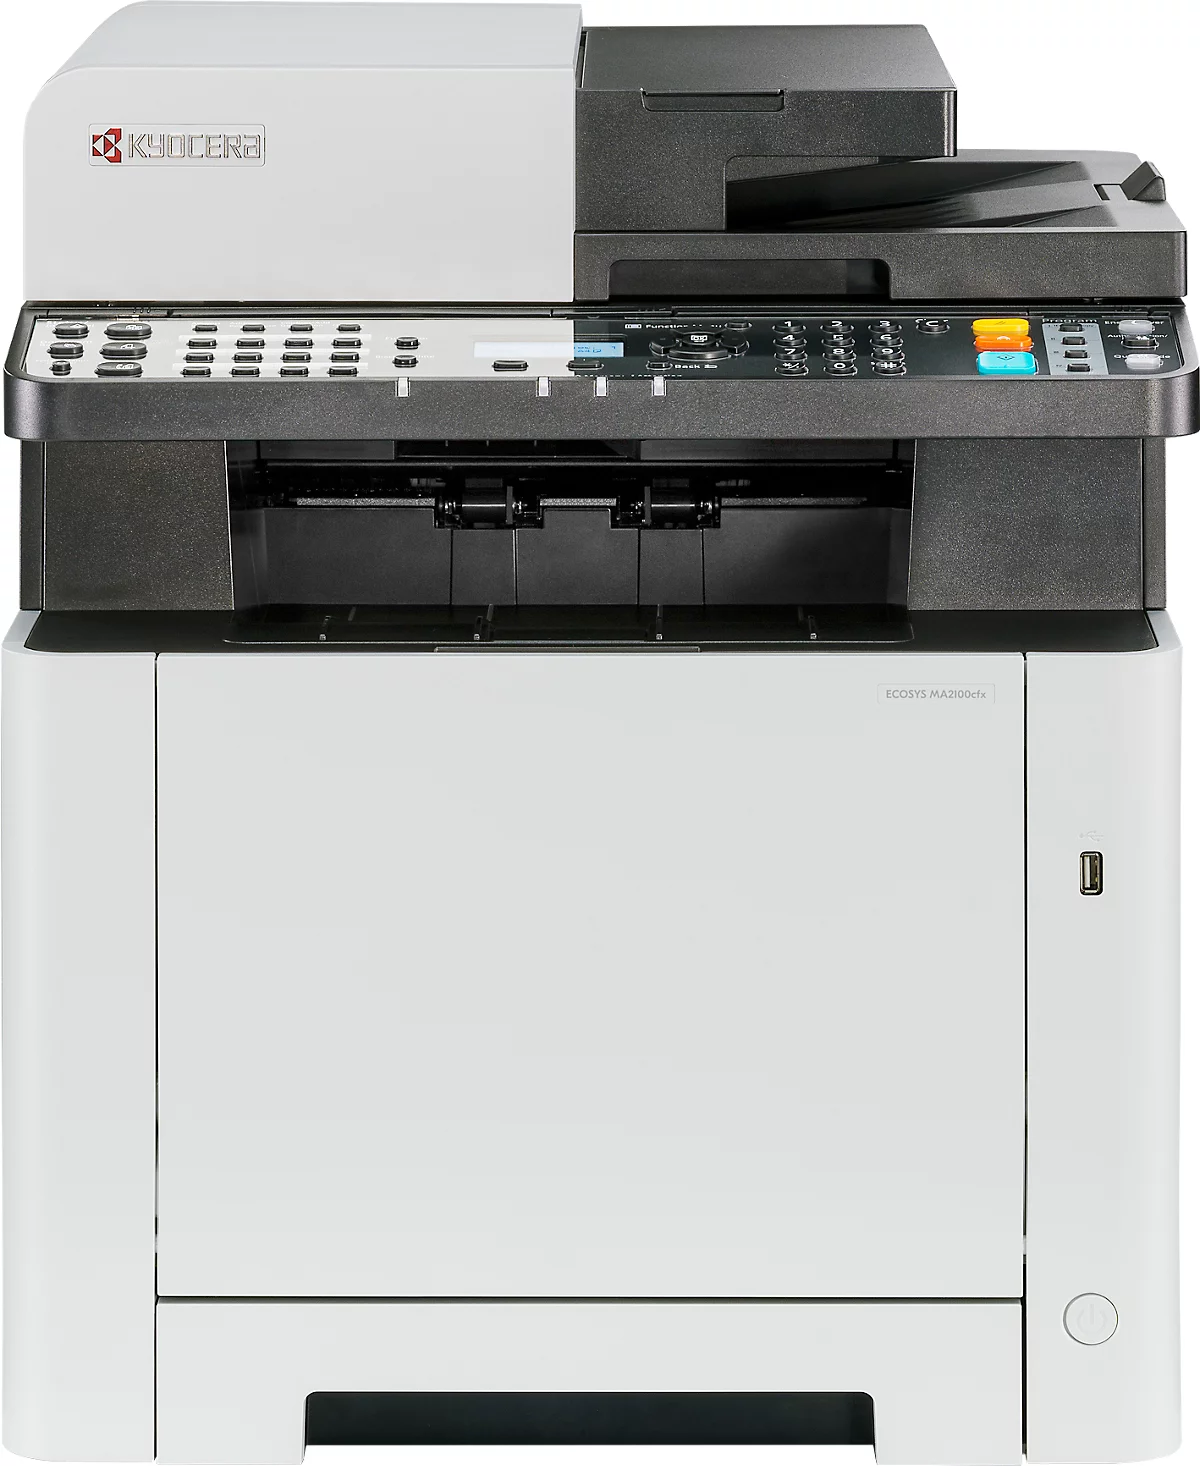 Farblaser Multifunktionsdrucker Kyocera ECOSYS MA2100cfx, 4-in-1, USB 2.0/LAN, Auto-Duplex/Mobildruck, bis A4, inkl. CMYK-Toner